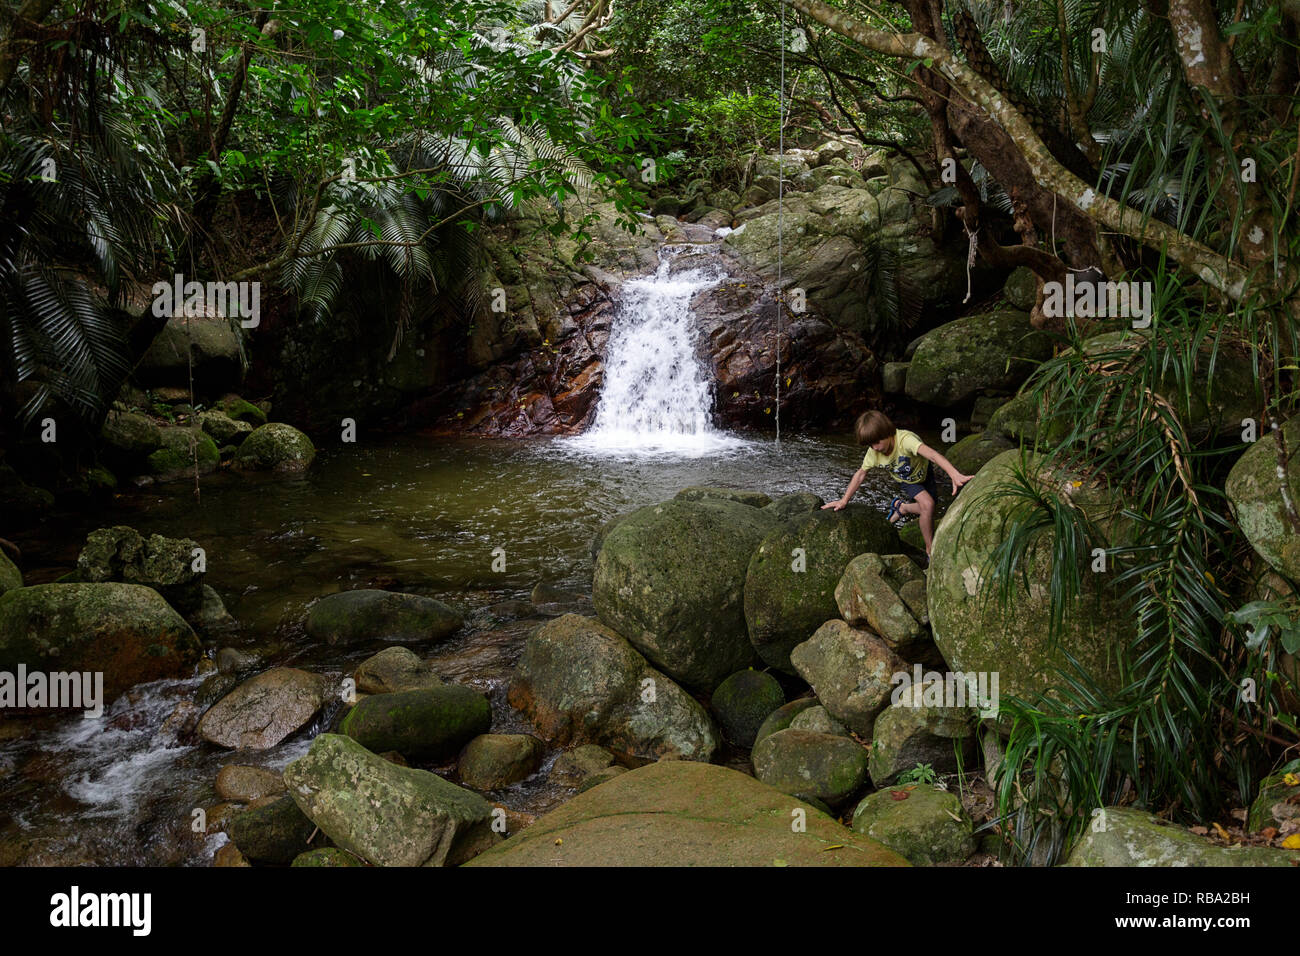 Young boy climbing on rocks while stream trekking in tropical forest at Arakawa falls, Ishigaki, Japan Stock Photo